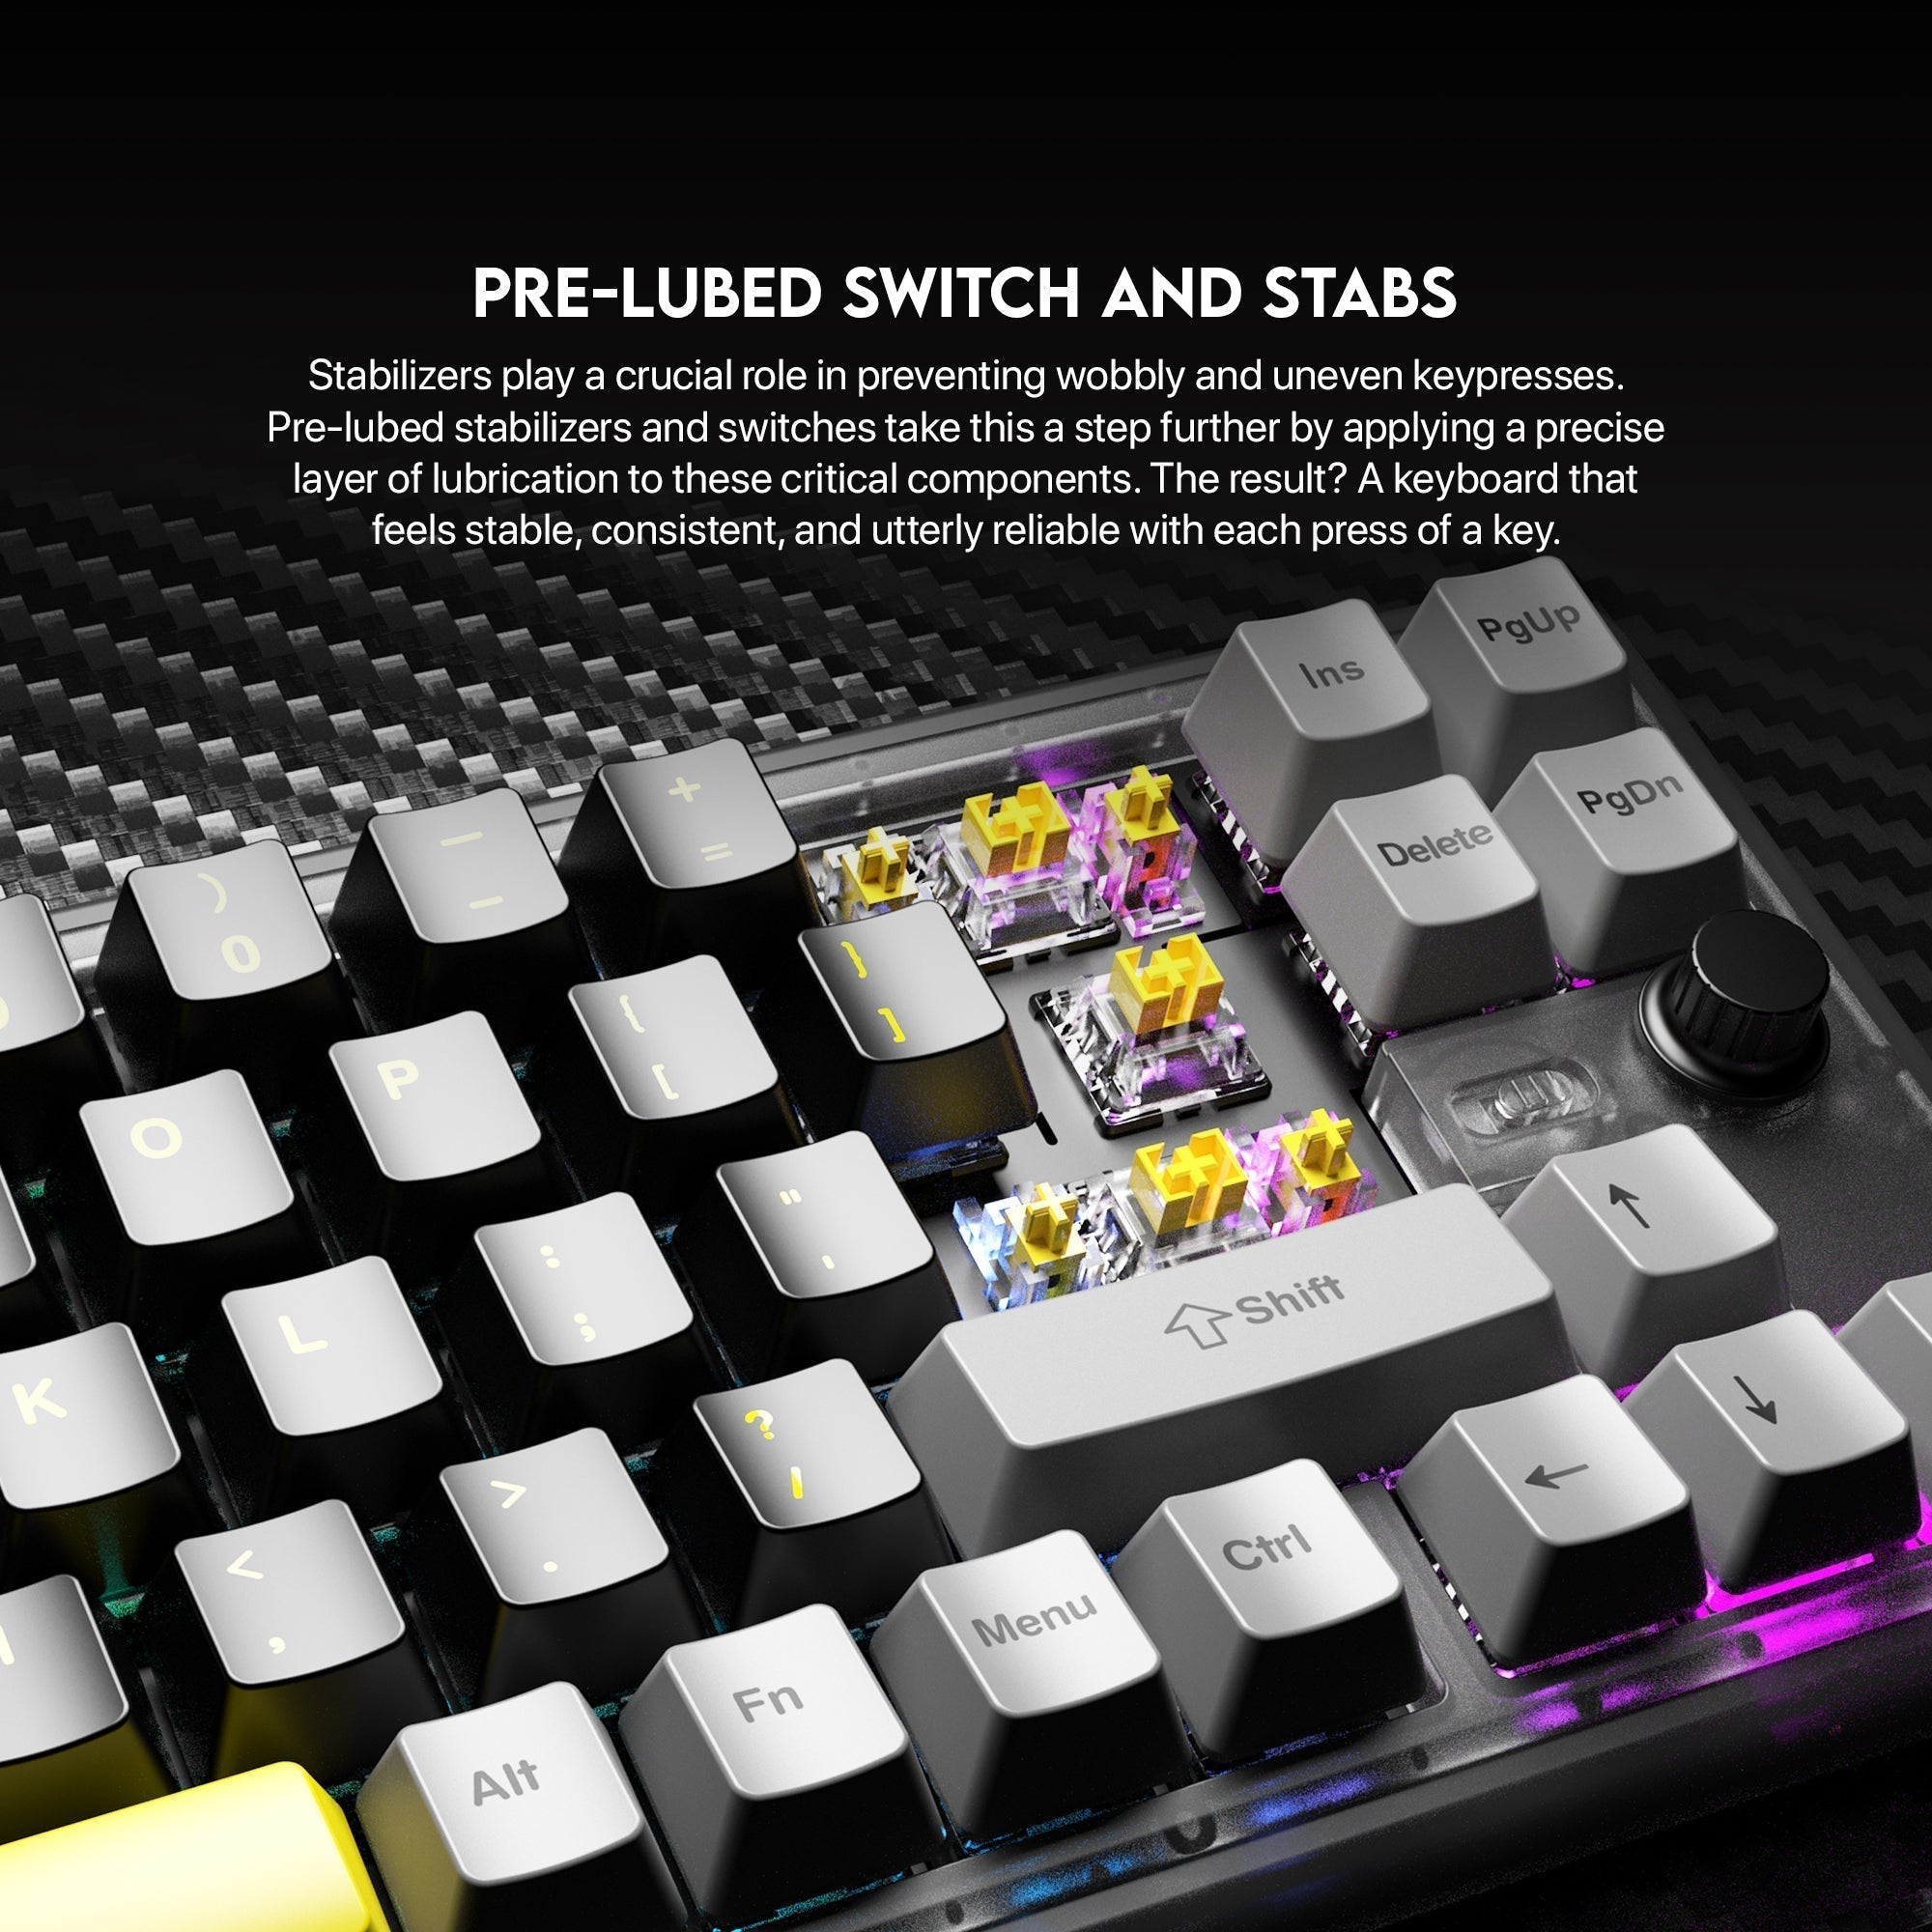 Fantech Maxfit70 MK911 Vibe Edition LONDON TOUR Mechanical Gaming Keyboard